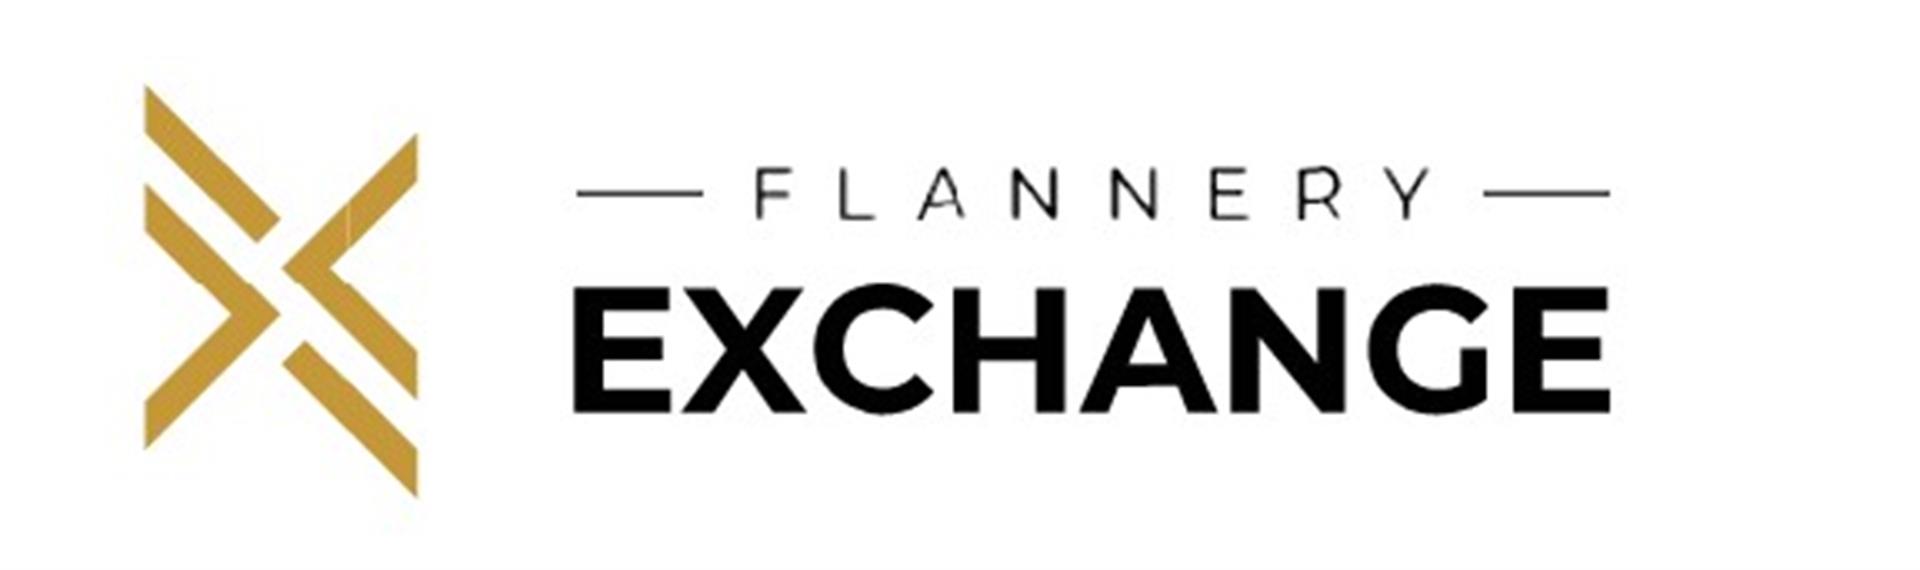 Flannery Exchange Logo